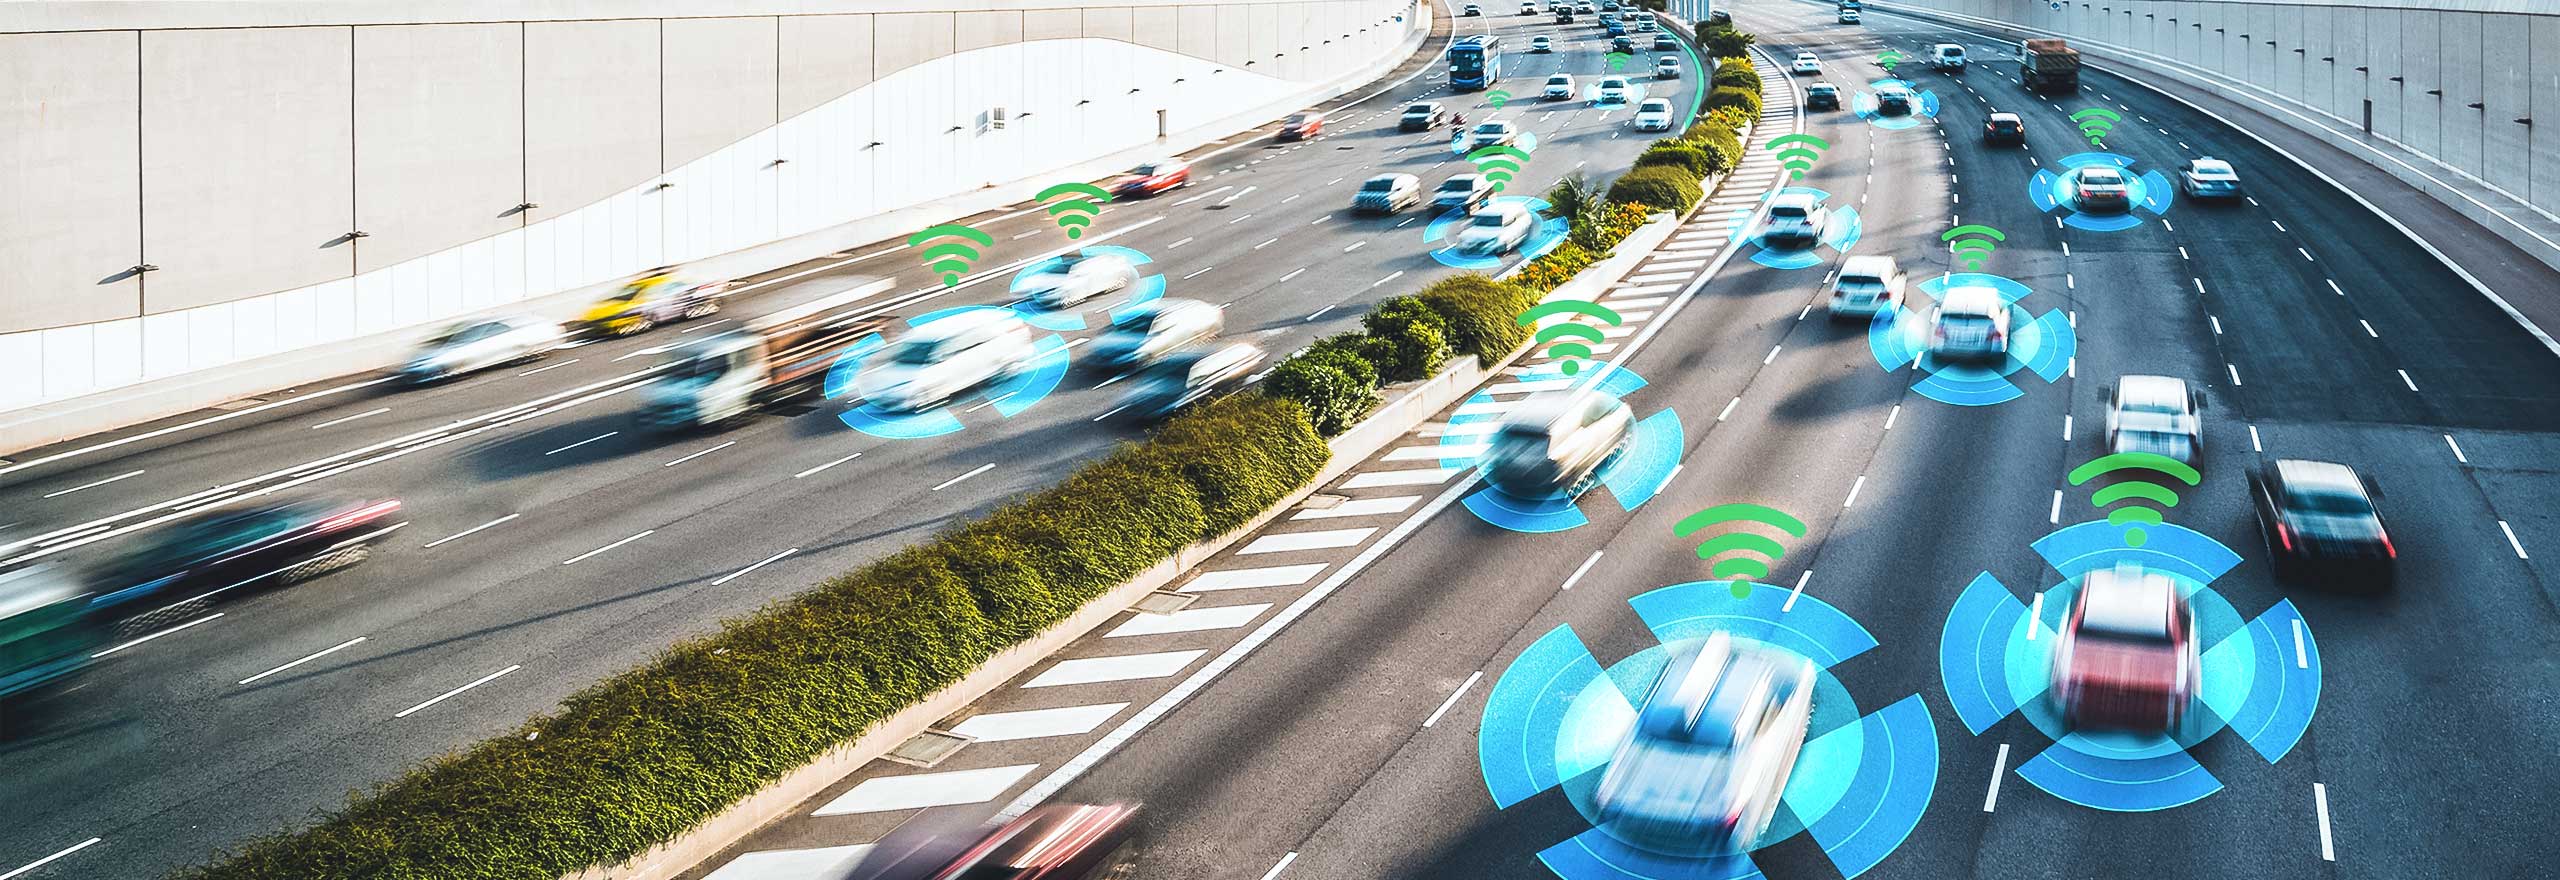 Hexagonの自律走行車認識ソリューションによって分析される高速道路上の自動車